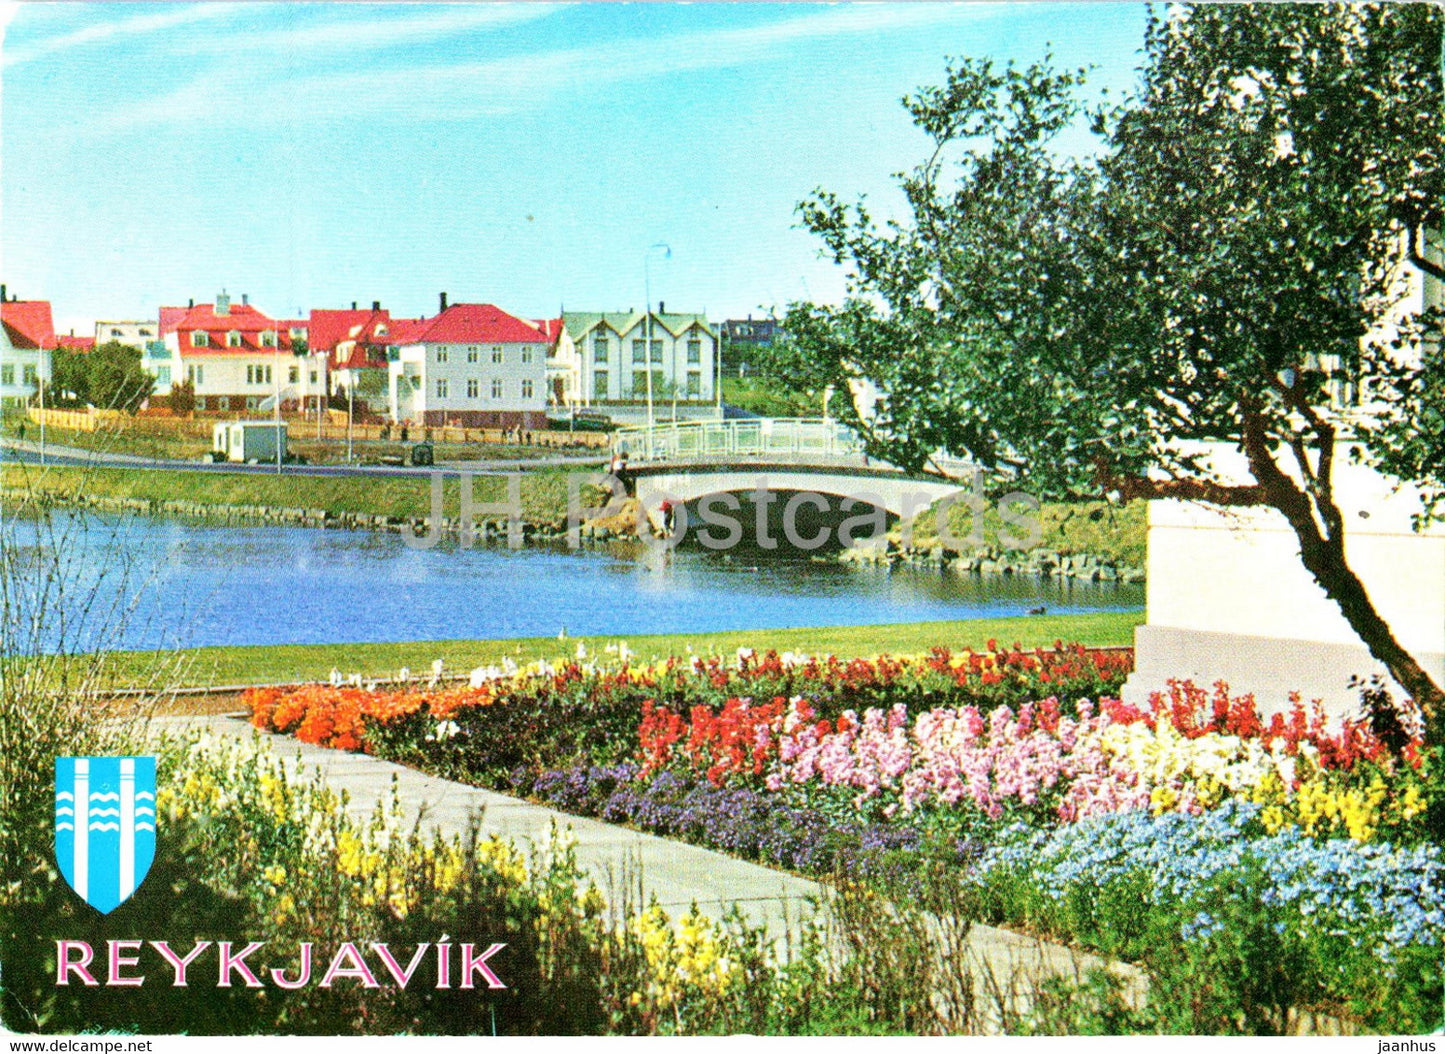 Reykjavik - Hljomskalagardurinn - a public park - Iceland - unused - JH Postcards